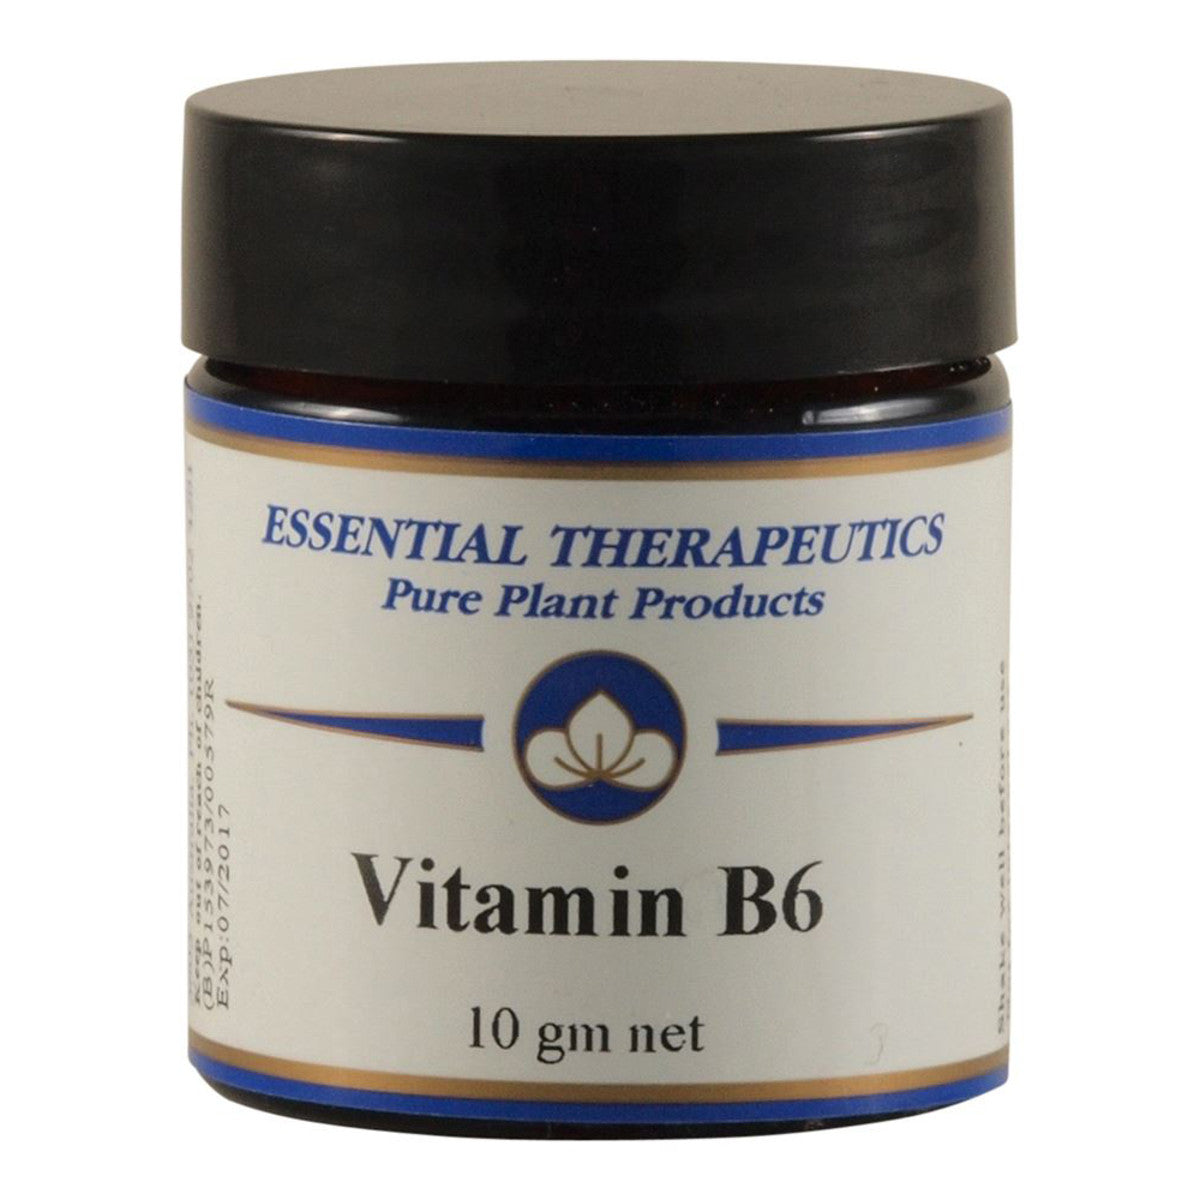 Essential Therapeutics - Vitamin B6 10g